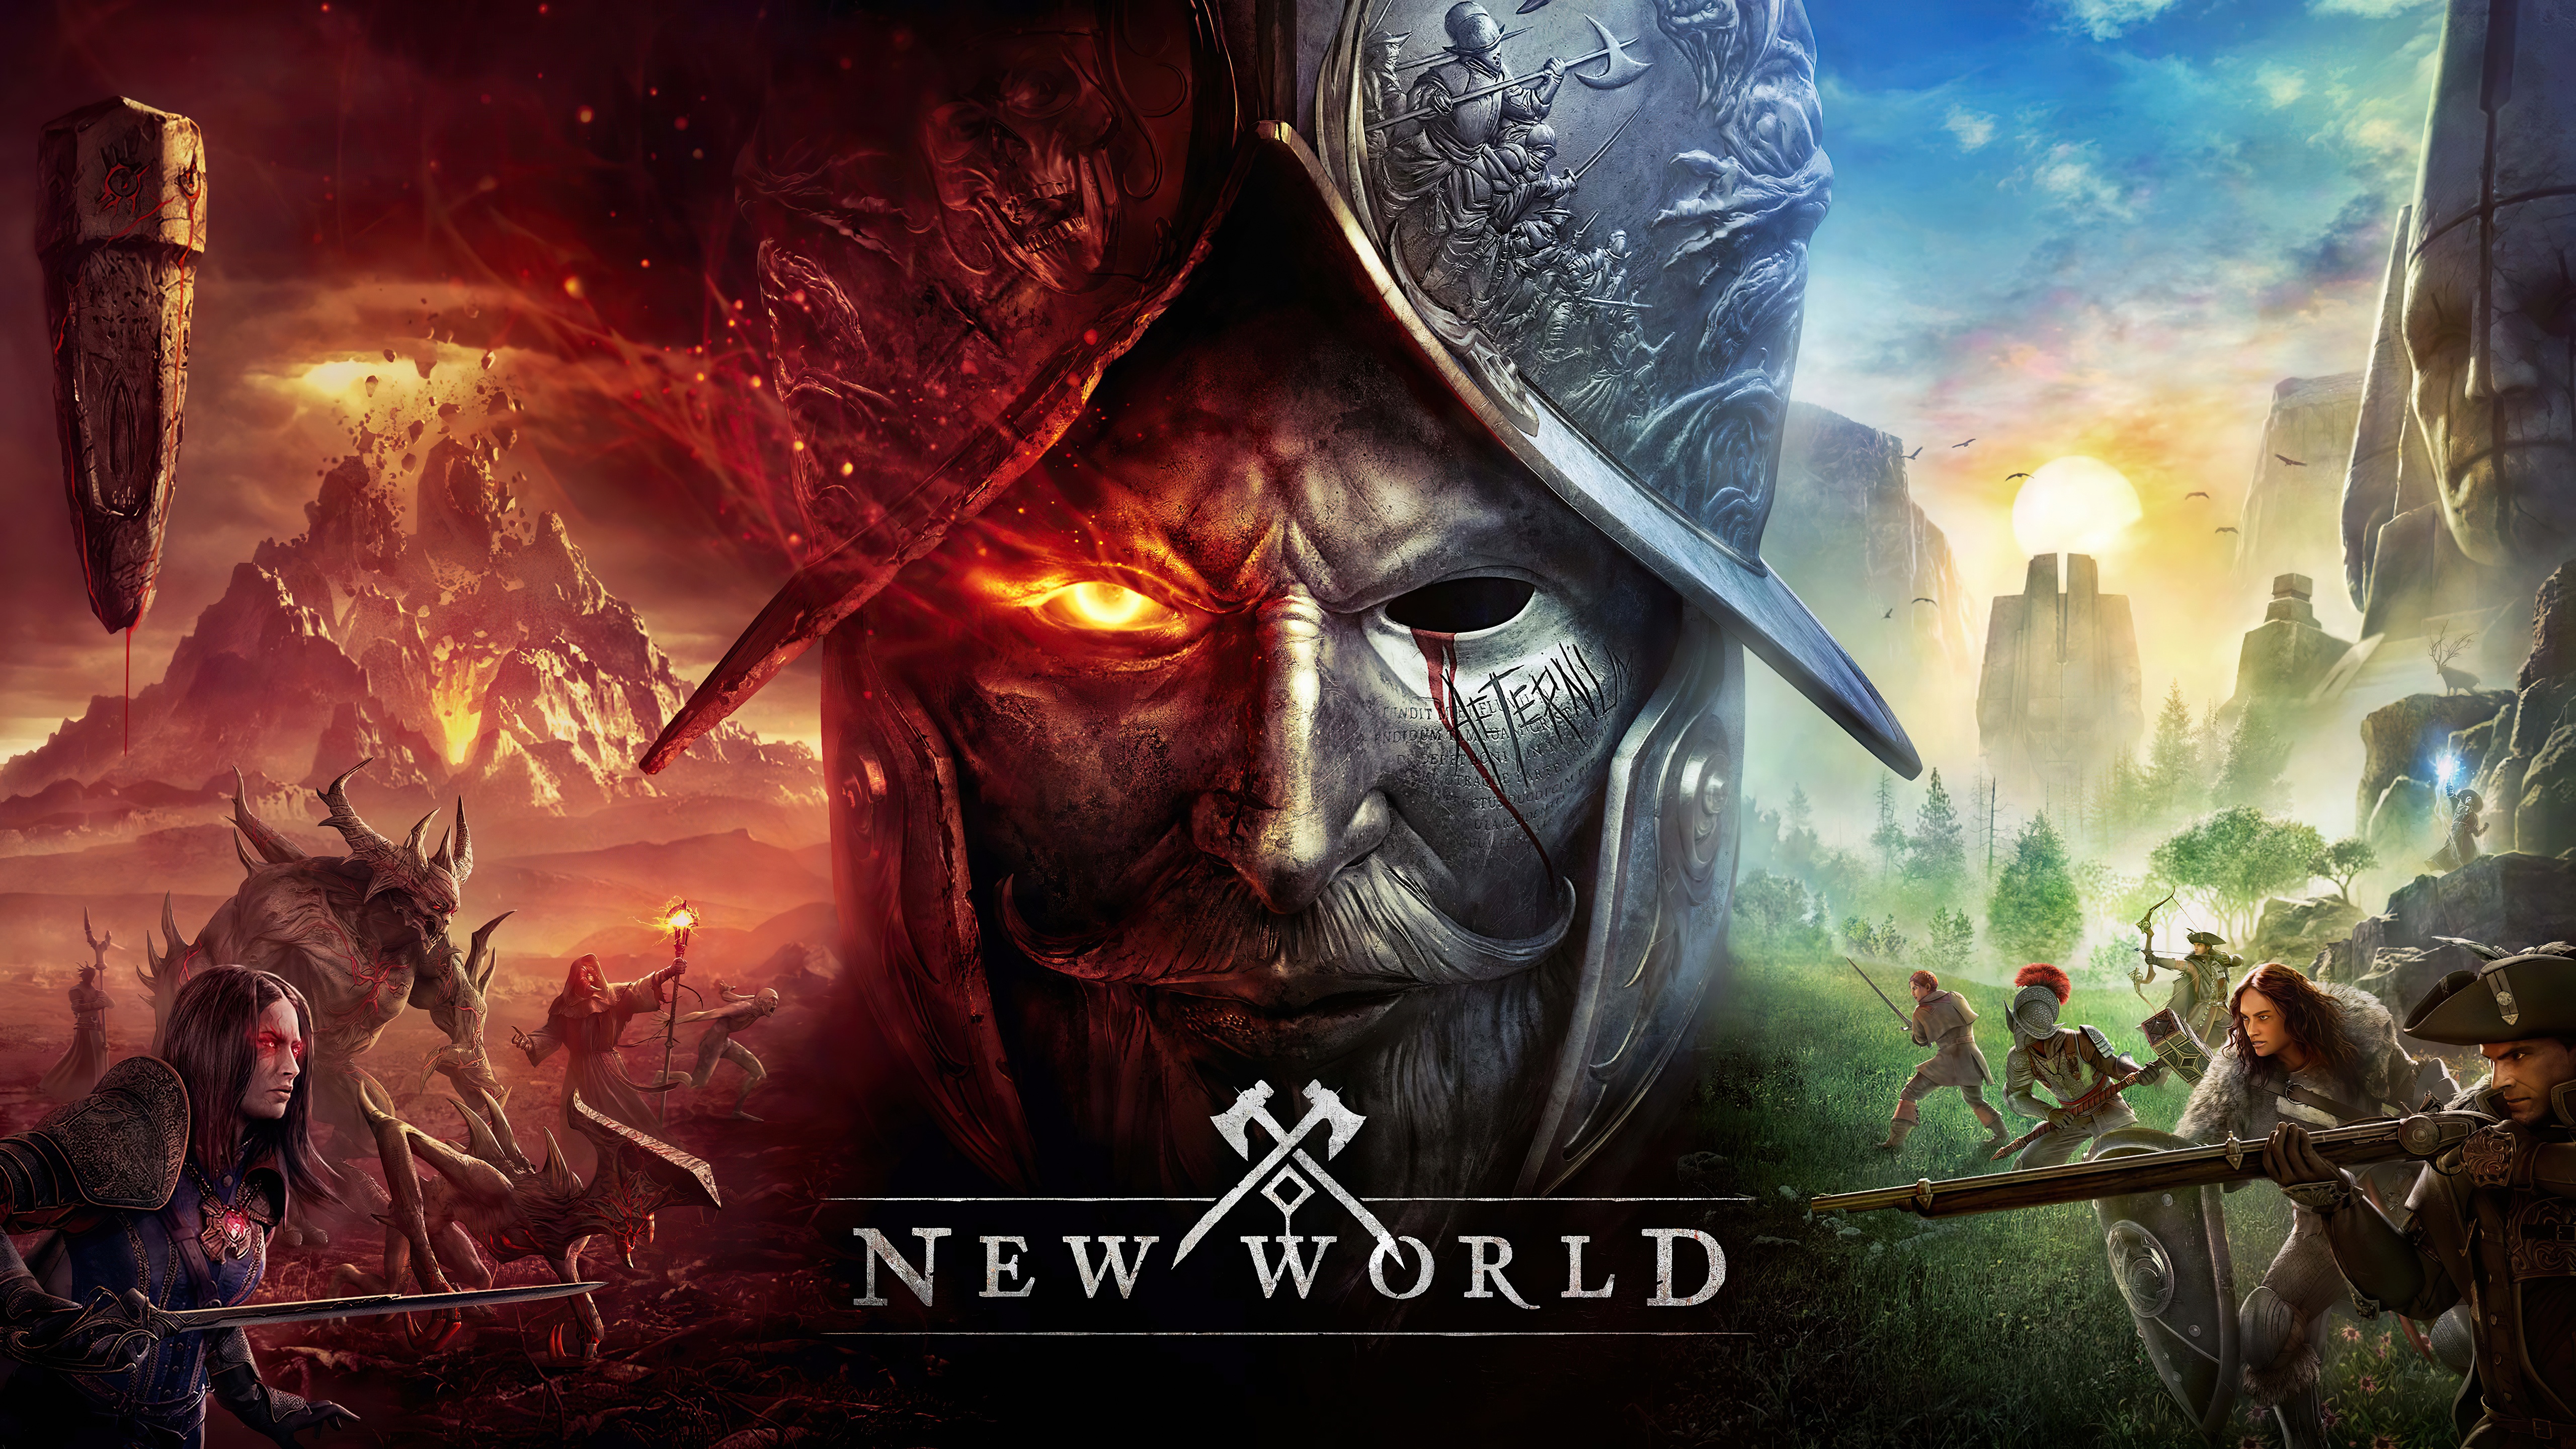 Your new world. New World (игра). New World игра 2020. Обложки игр. New World картинки.